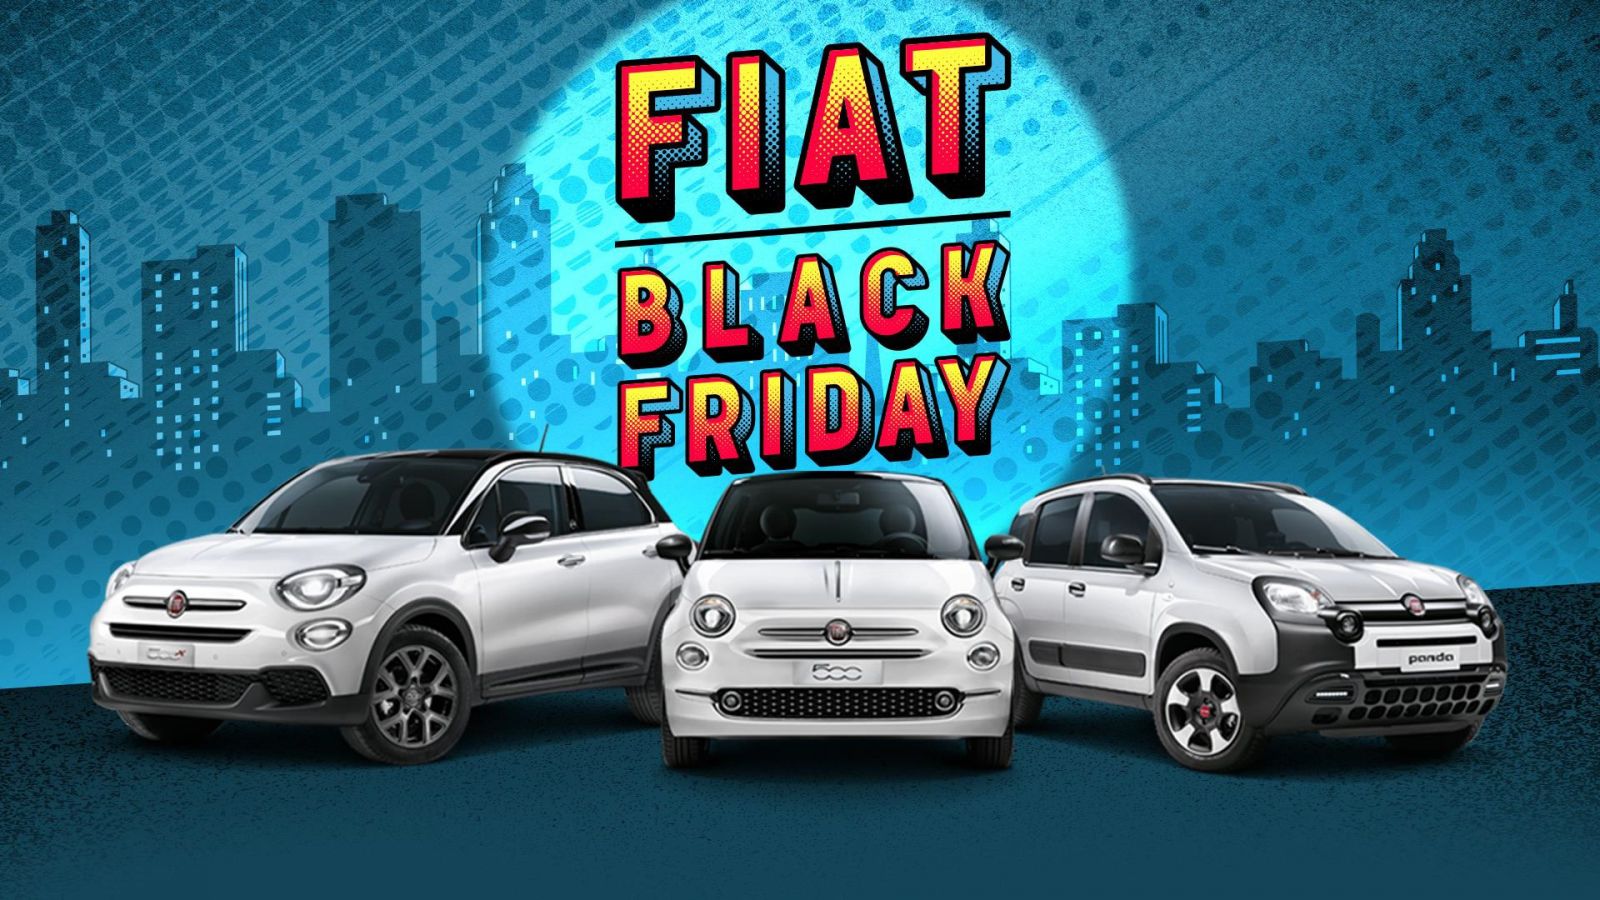 Black Friday by Fiat